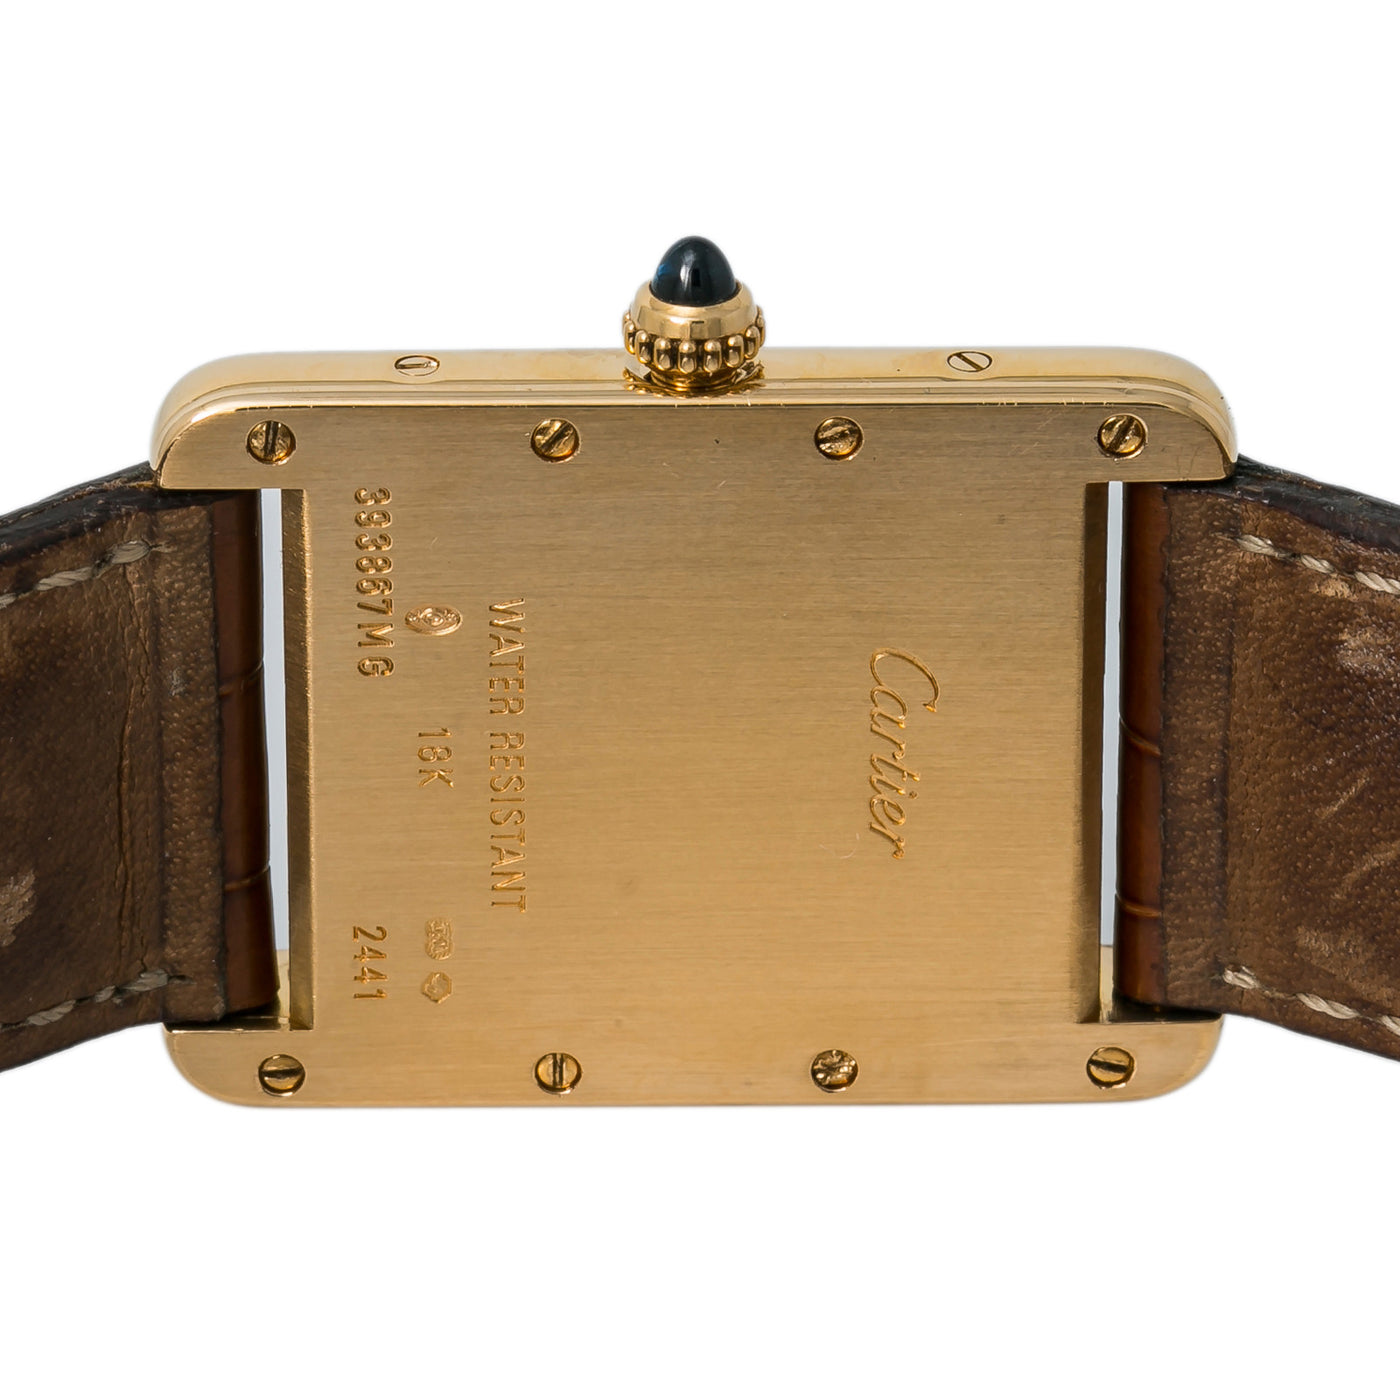 Cartier, Tank Louis Cartier, 18k Gold, Ref. 2441, Circa 2000